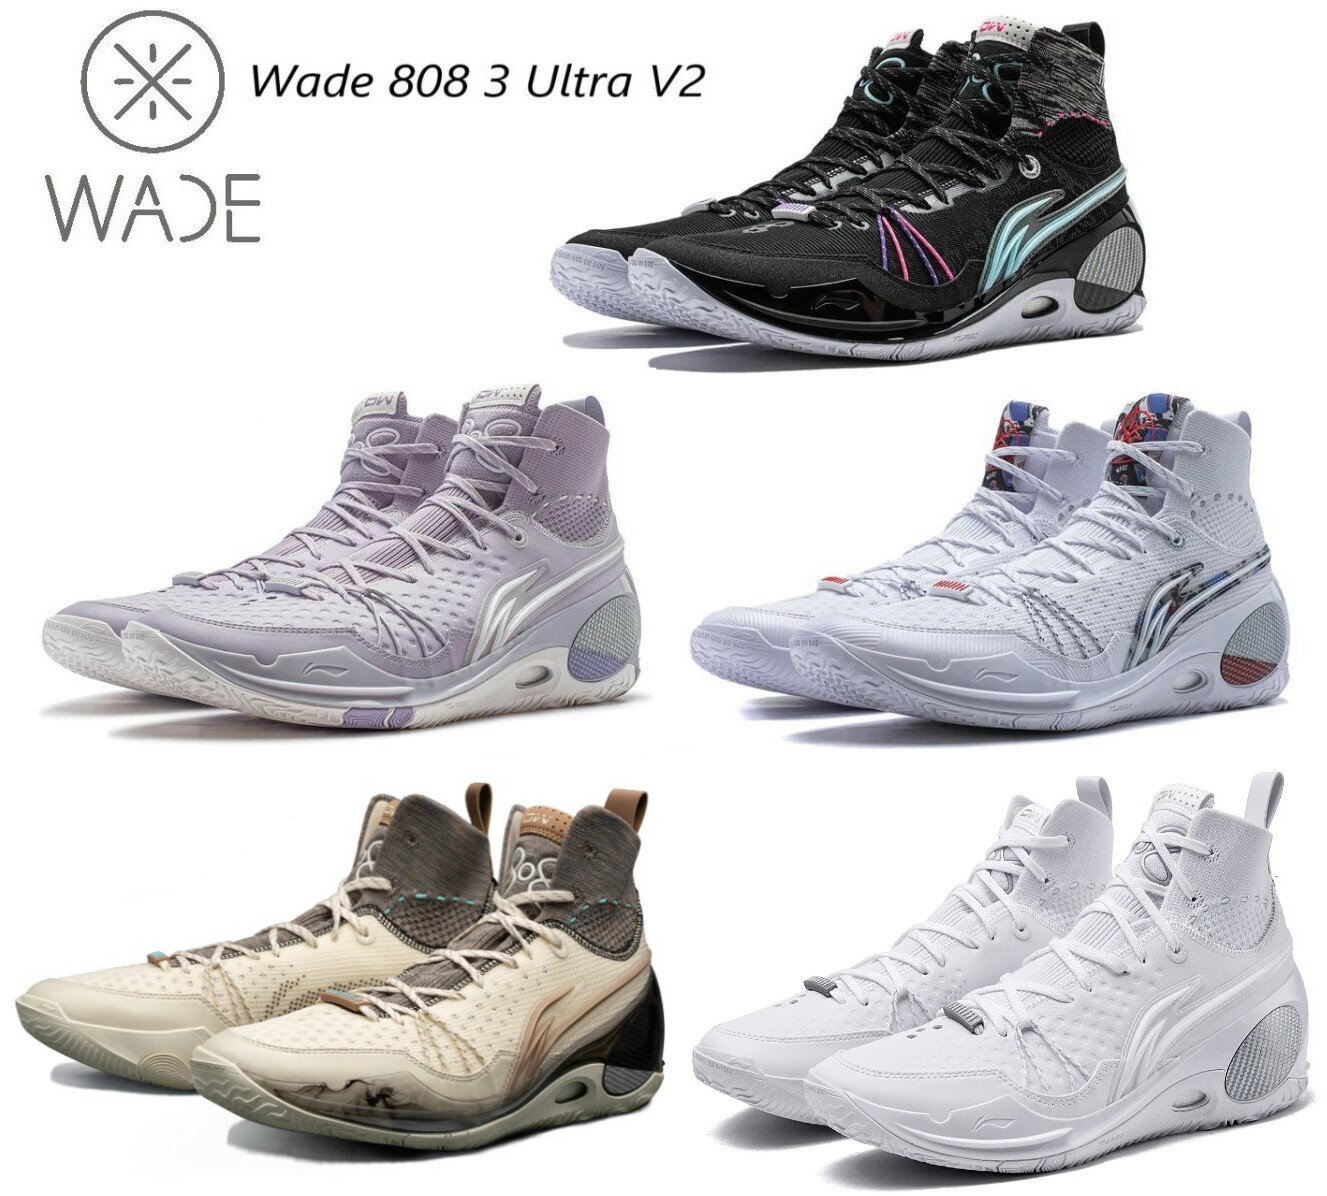 Way Of Wade ウェイ オブ ウェイド LI-Ning リーニン Wade 808 3 Ultra V2 ウェイド 808 3 ウルトラ V2 メンズ キッズ バッシュ スニーカー バスケット トレンド ジャンプ力アップ